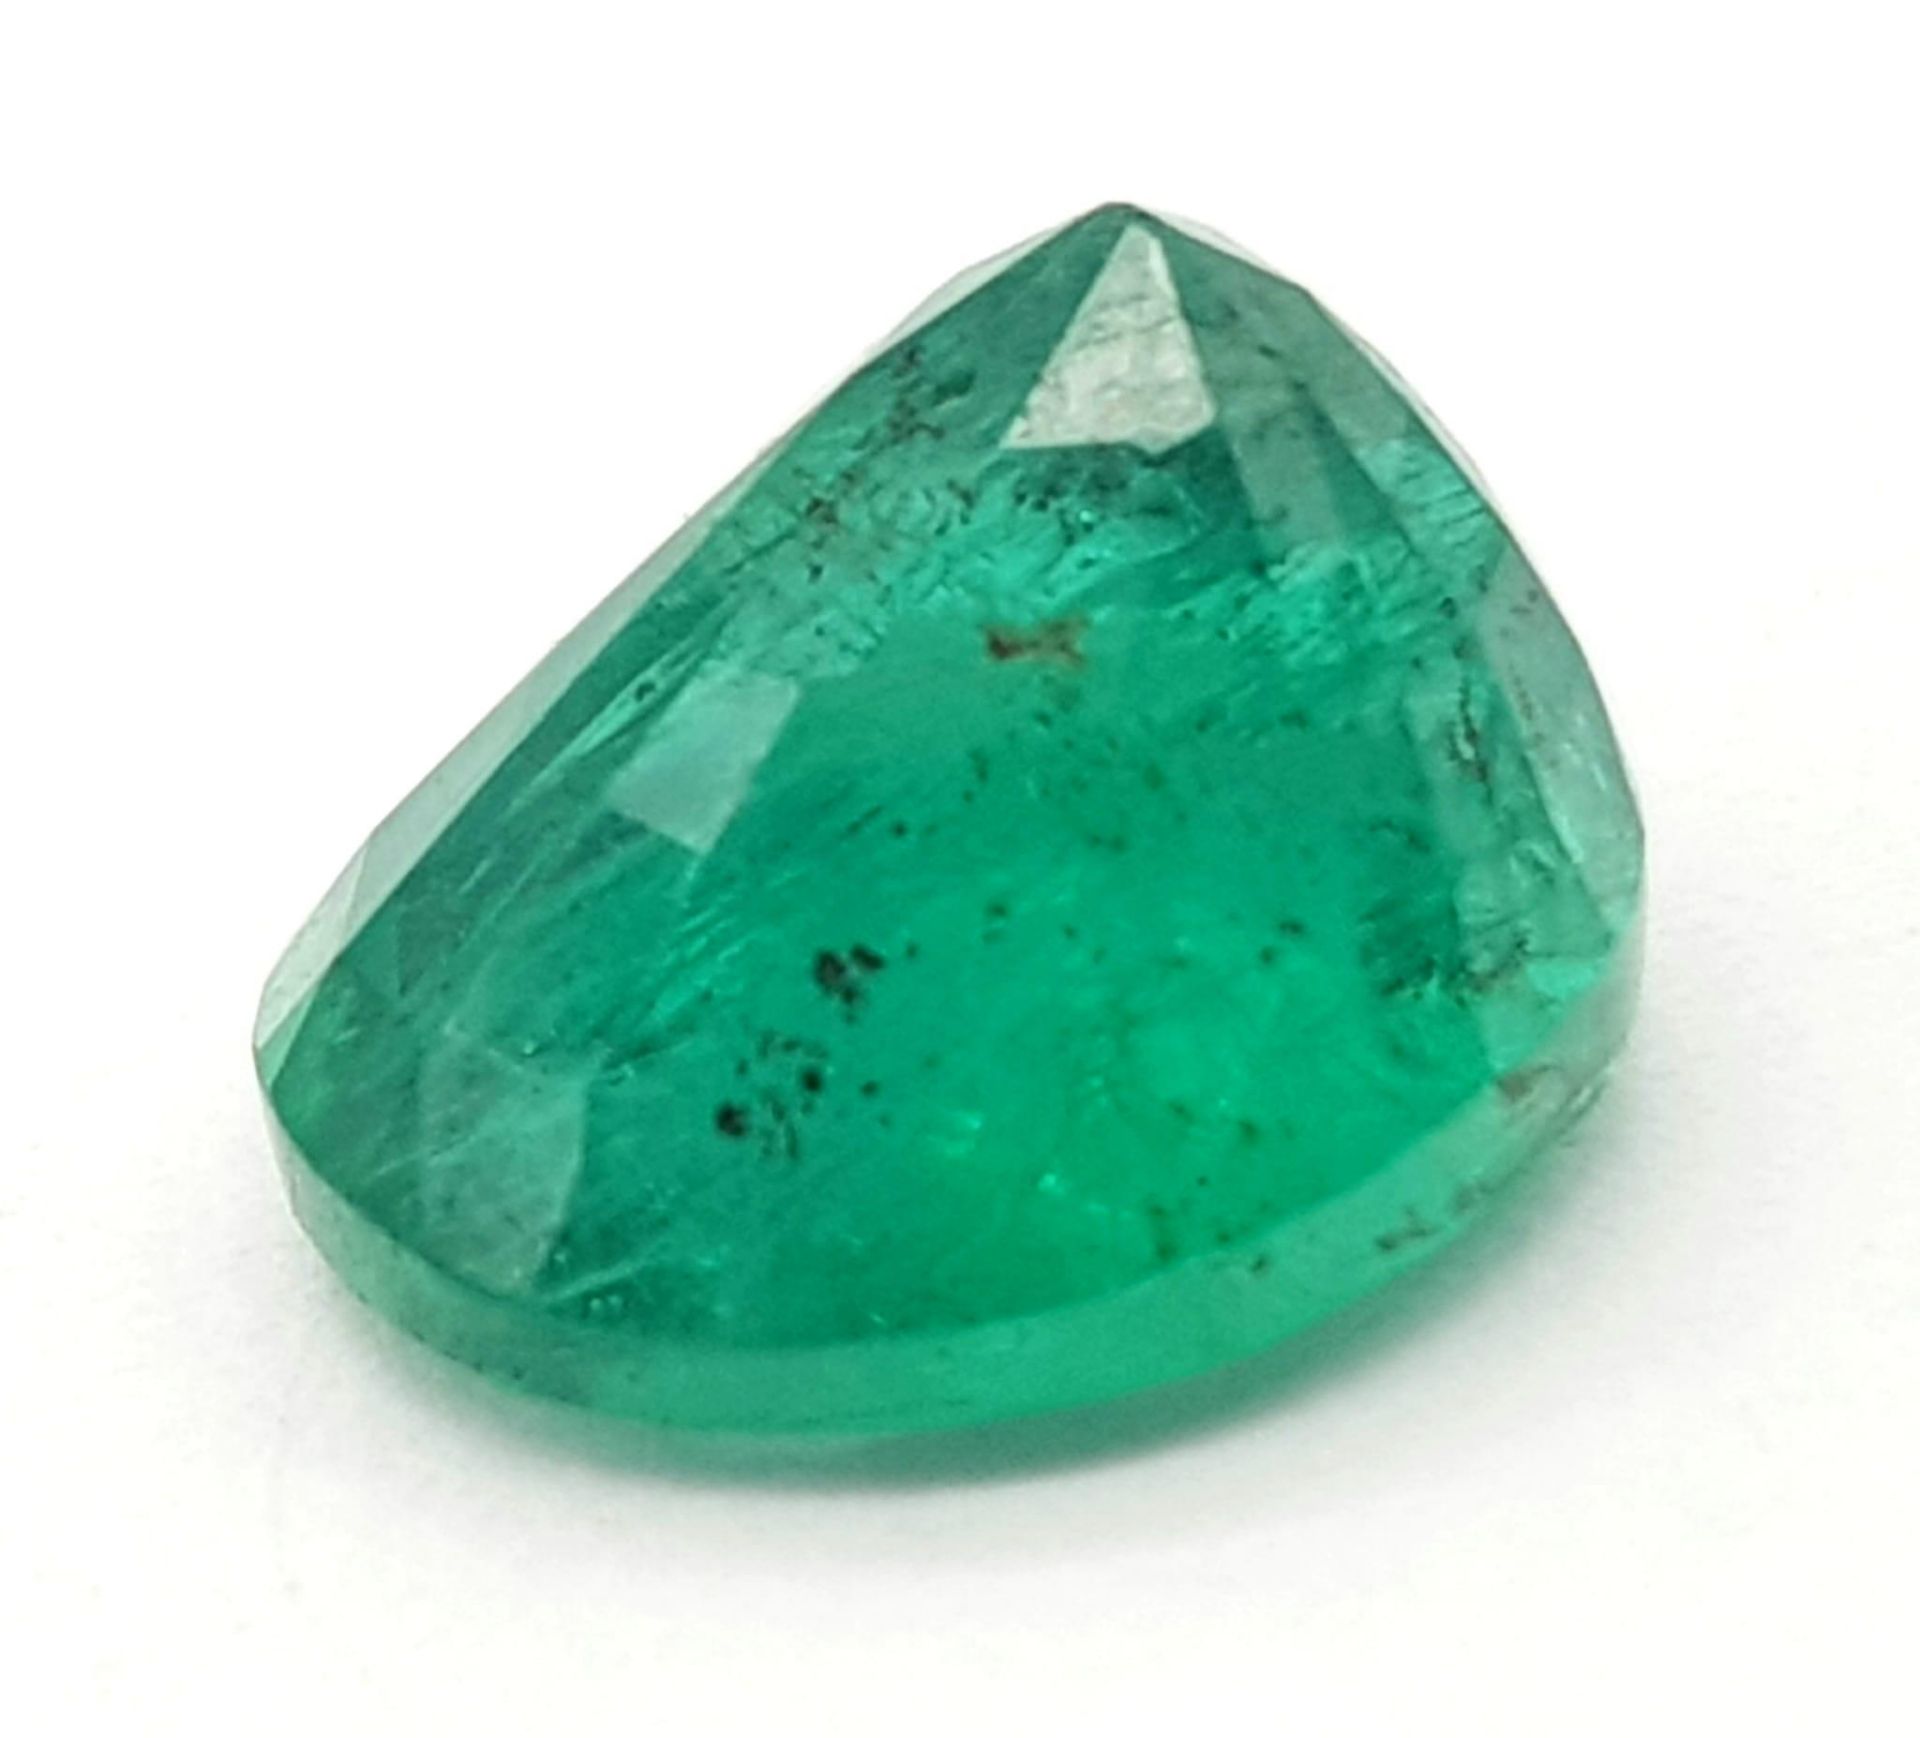 A 4.86ct Zambian Emerald - GTL certified. - Image 4 of 7